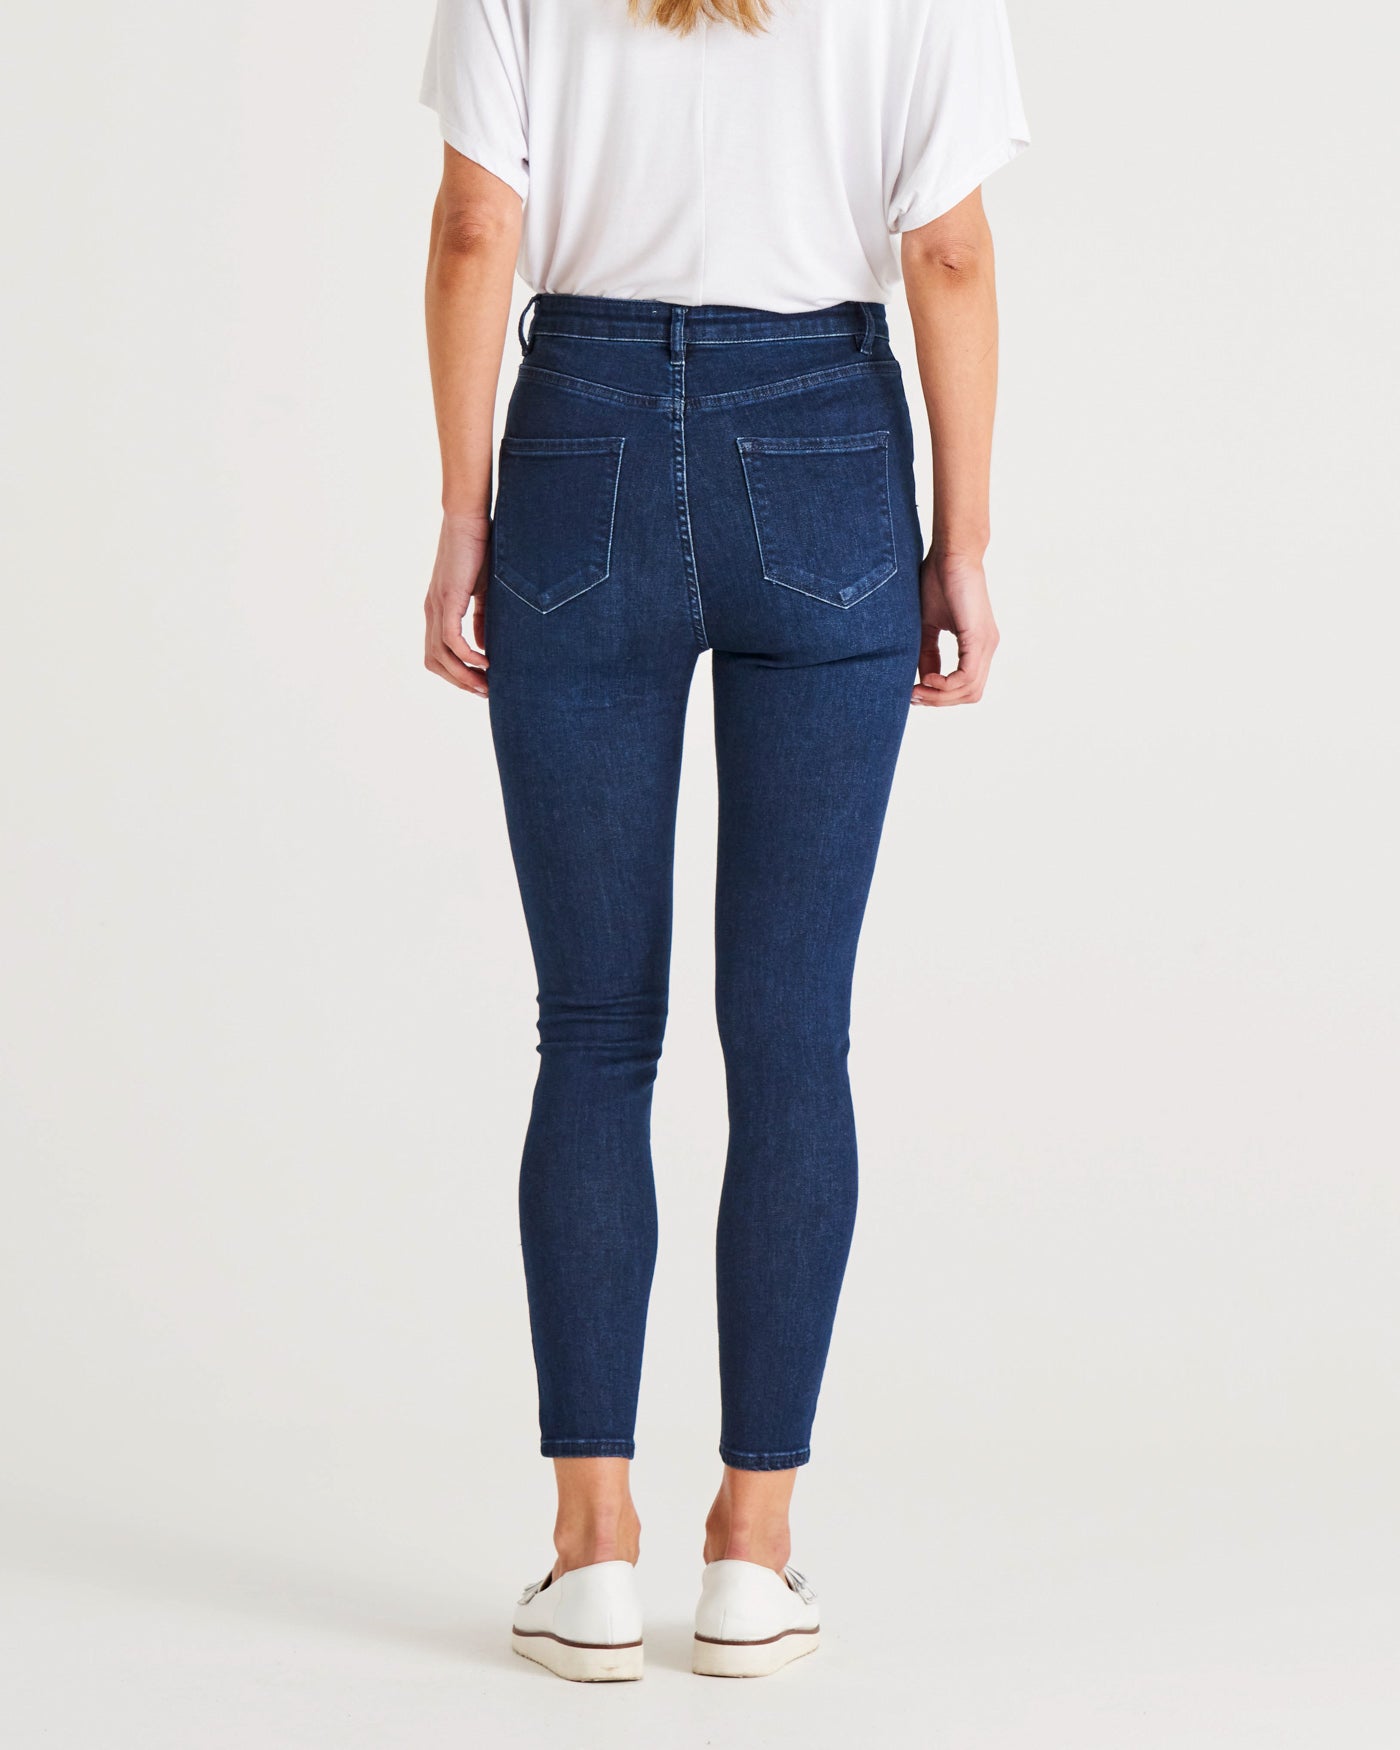 Betty Essential Mid-High Rise Skinny Stretchy Jeans - Indigo Blue